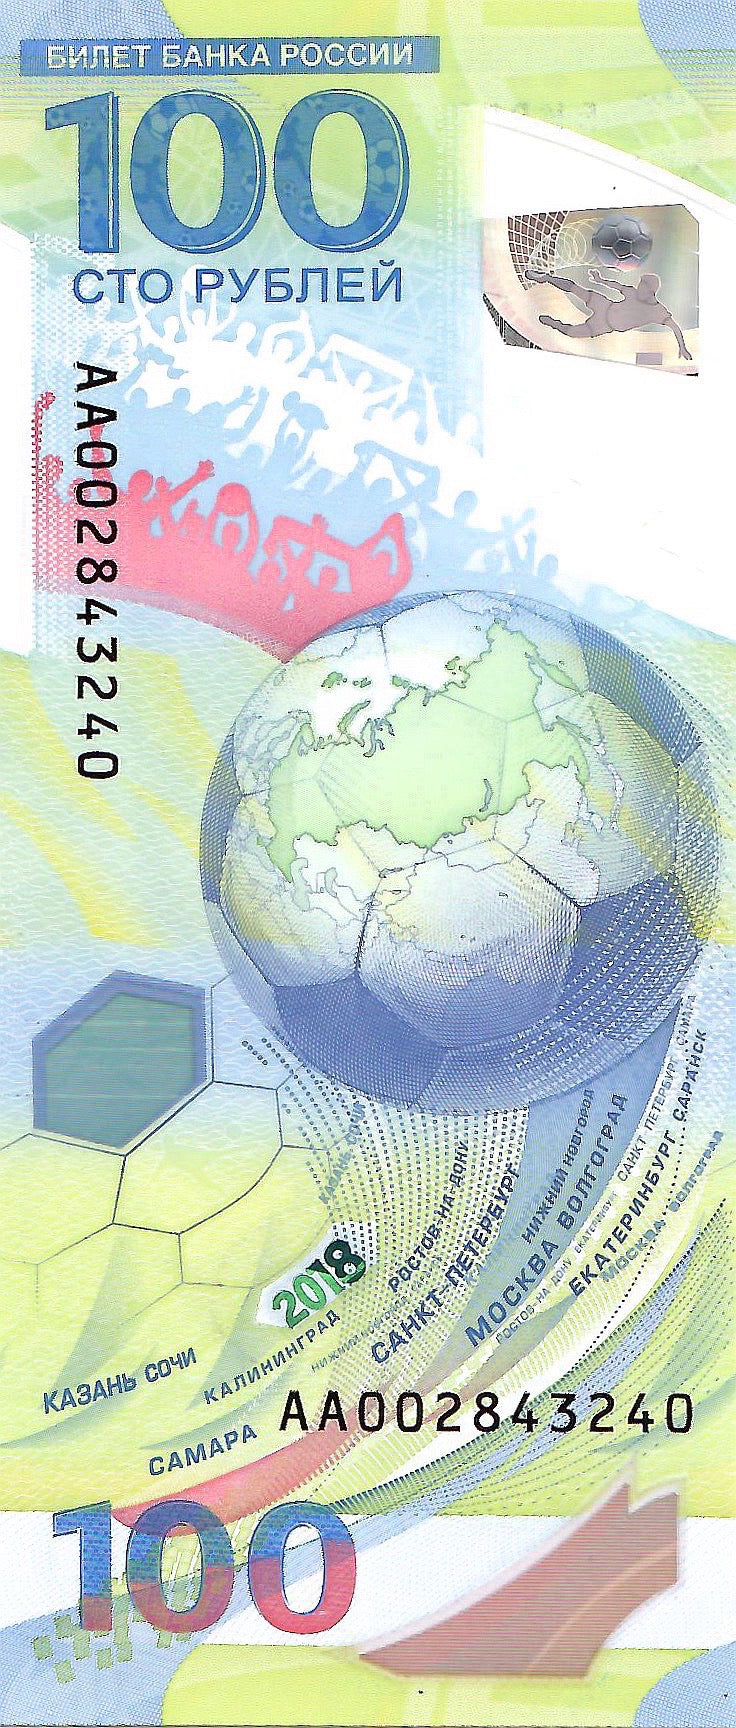 Russia 100 Rubles Banknote, 2018, P-280, UNC, Commemorative, Polymer